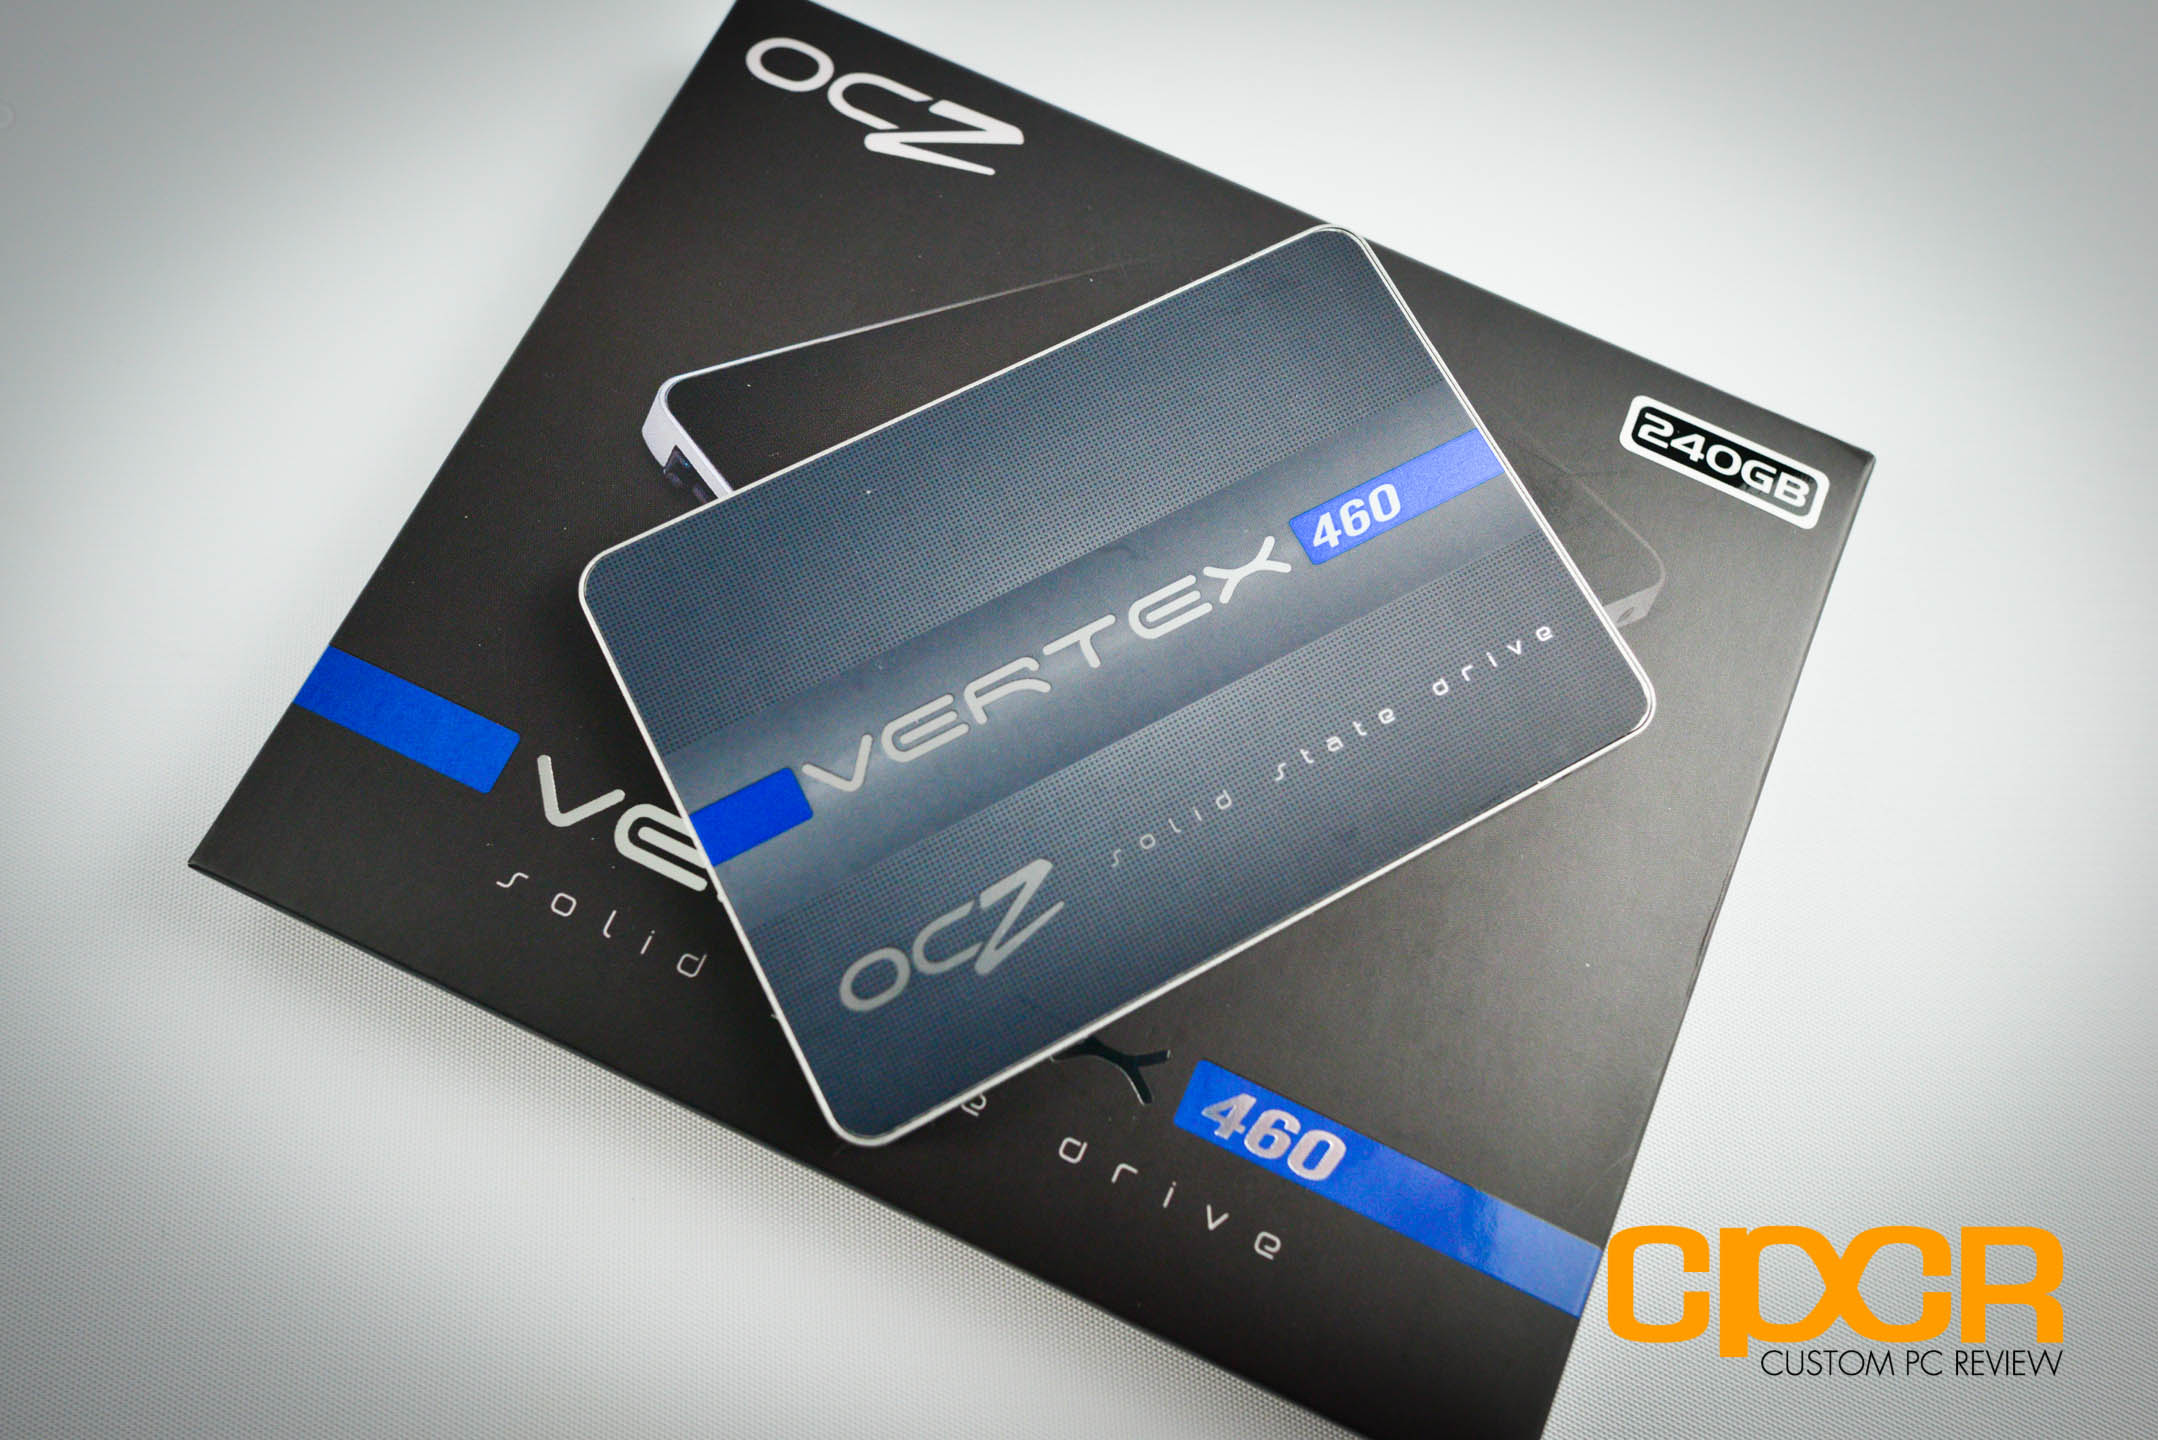 Basket Hummingbird revenge Review: OCZ Vertex 460 240GB SSD - Custom PC Review